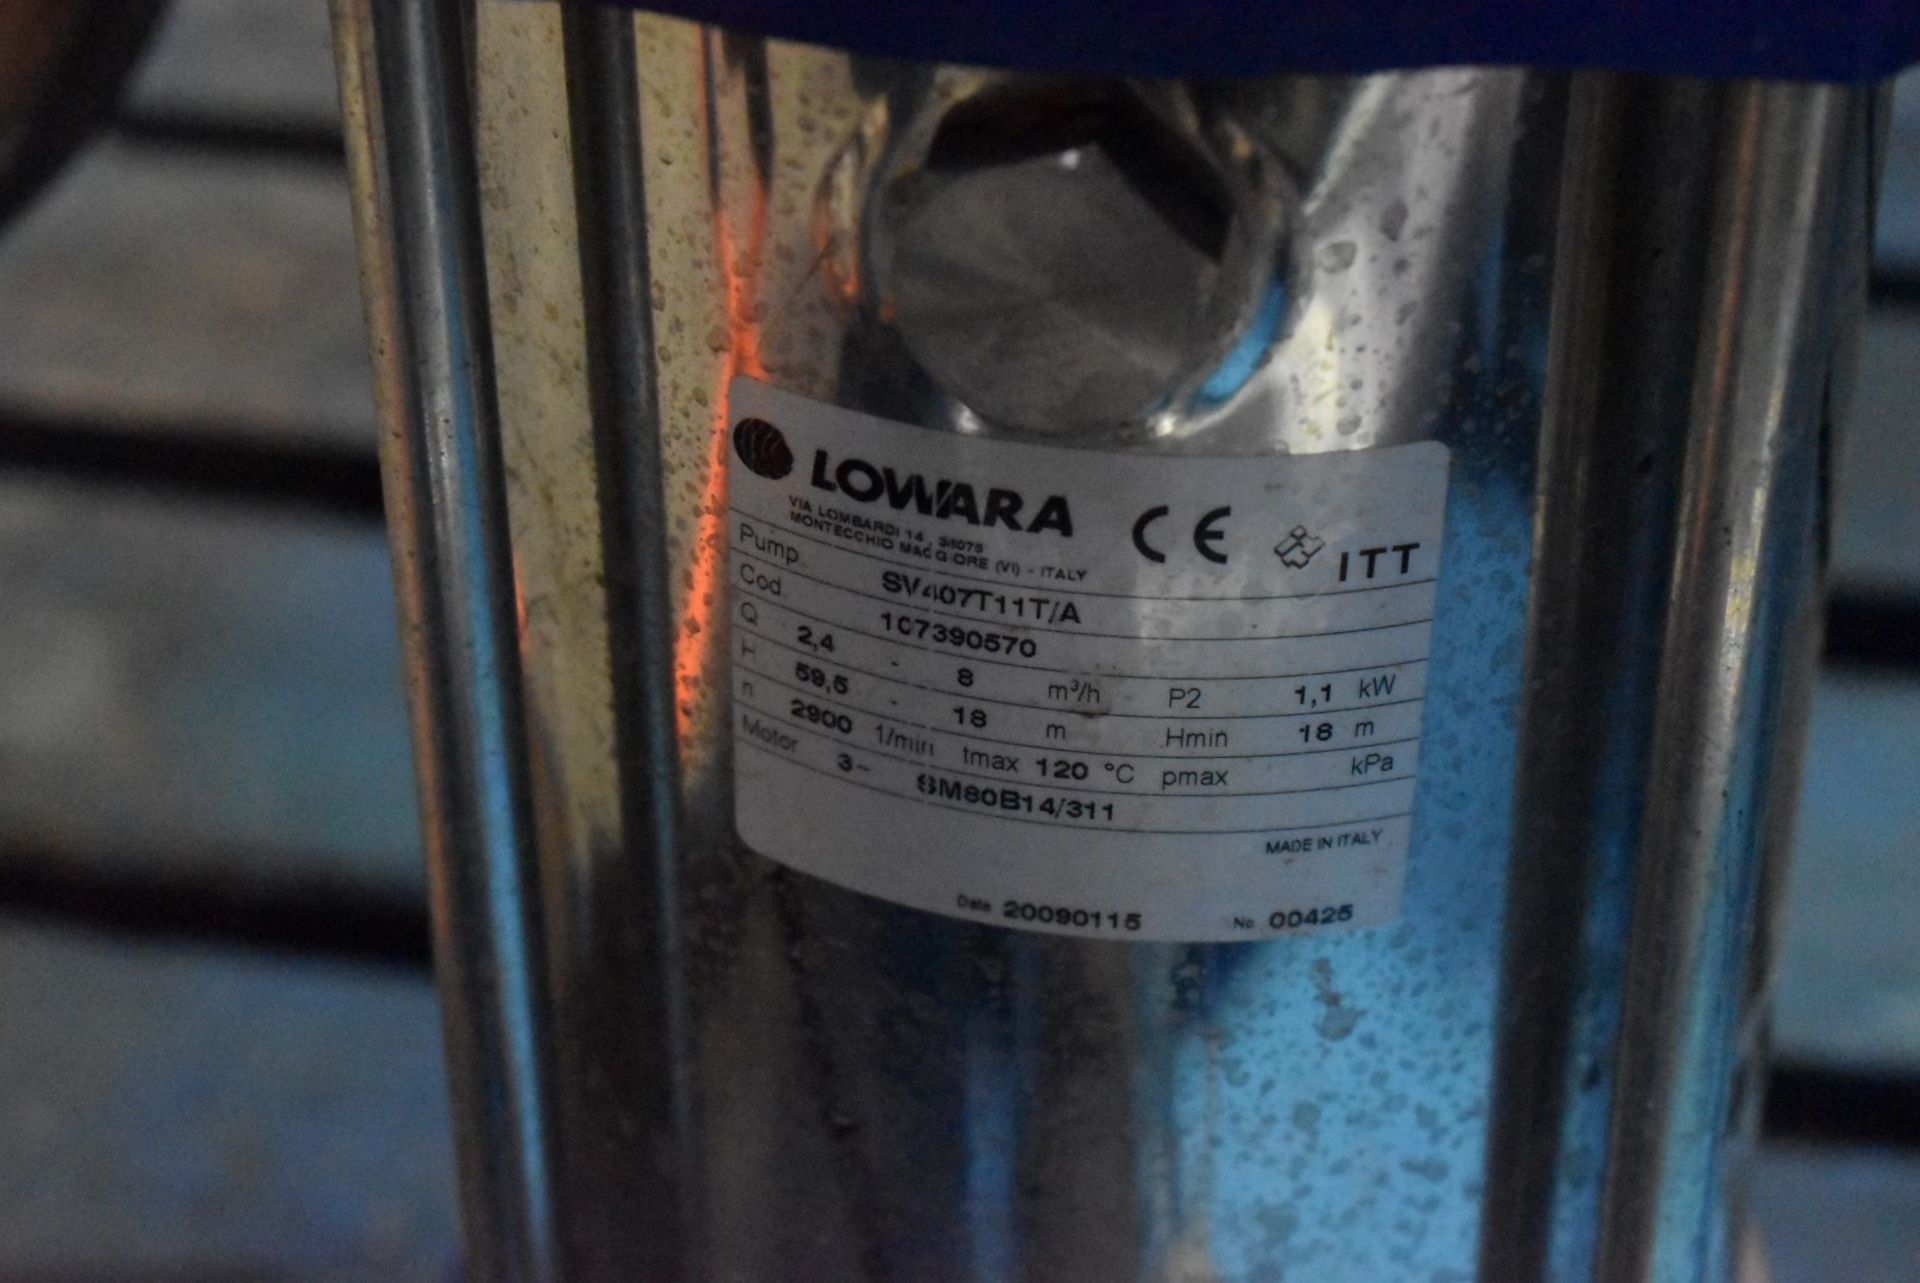 2 x Hydrovar HV2.015 Speed Water Pumps With Lowara SM80B14 Surface Motors, Aquapresso 35L 10 Bar - Image 25 of 28